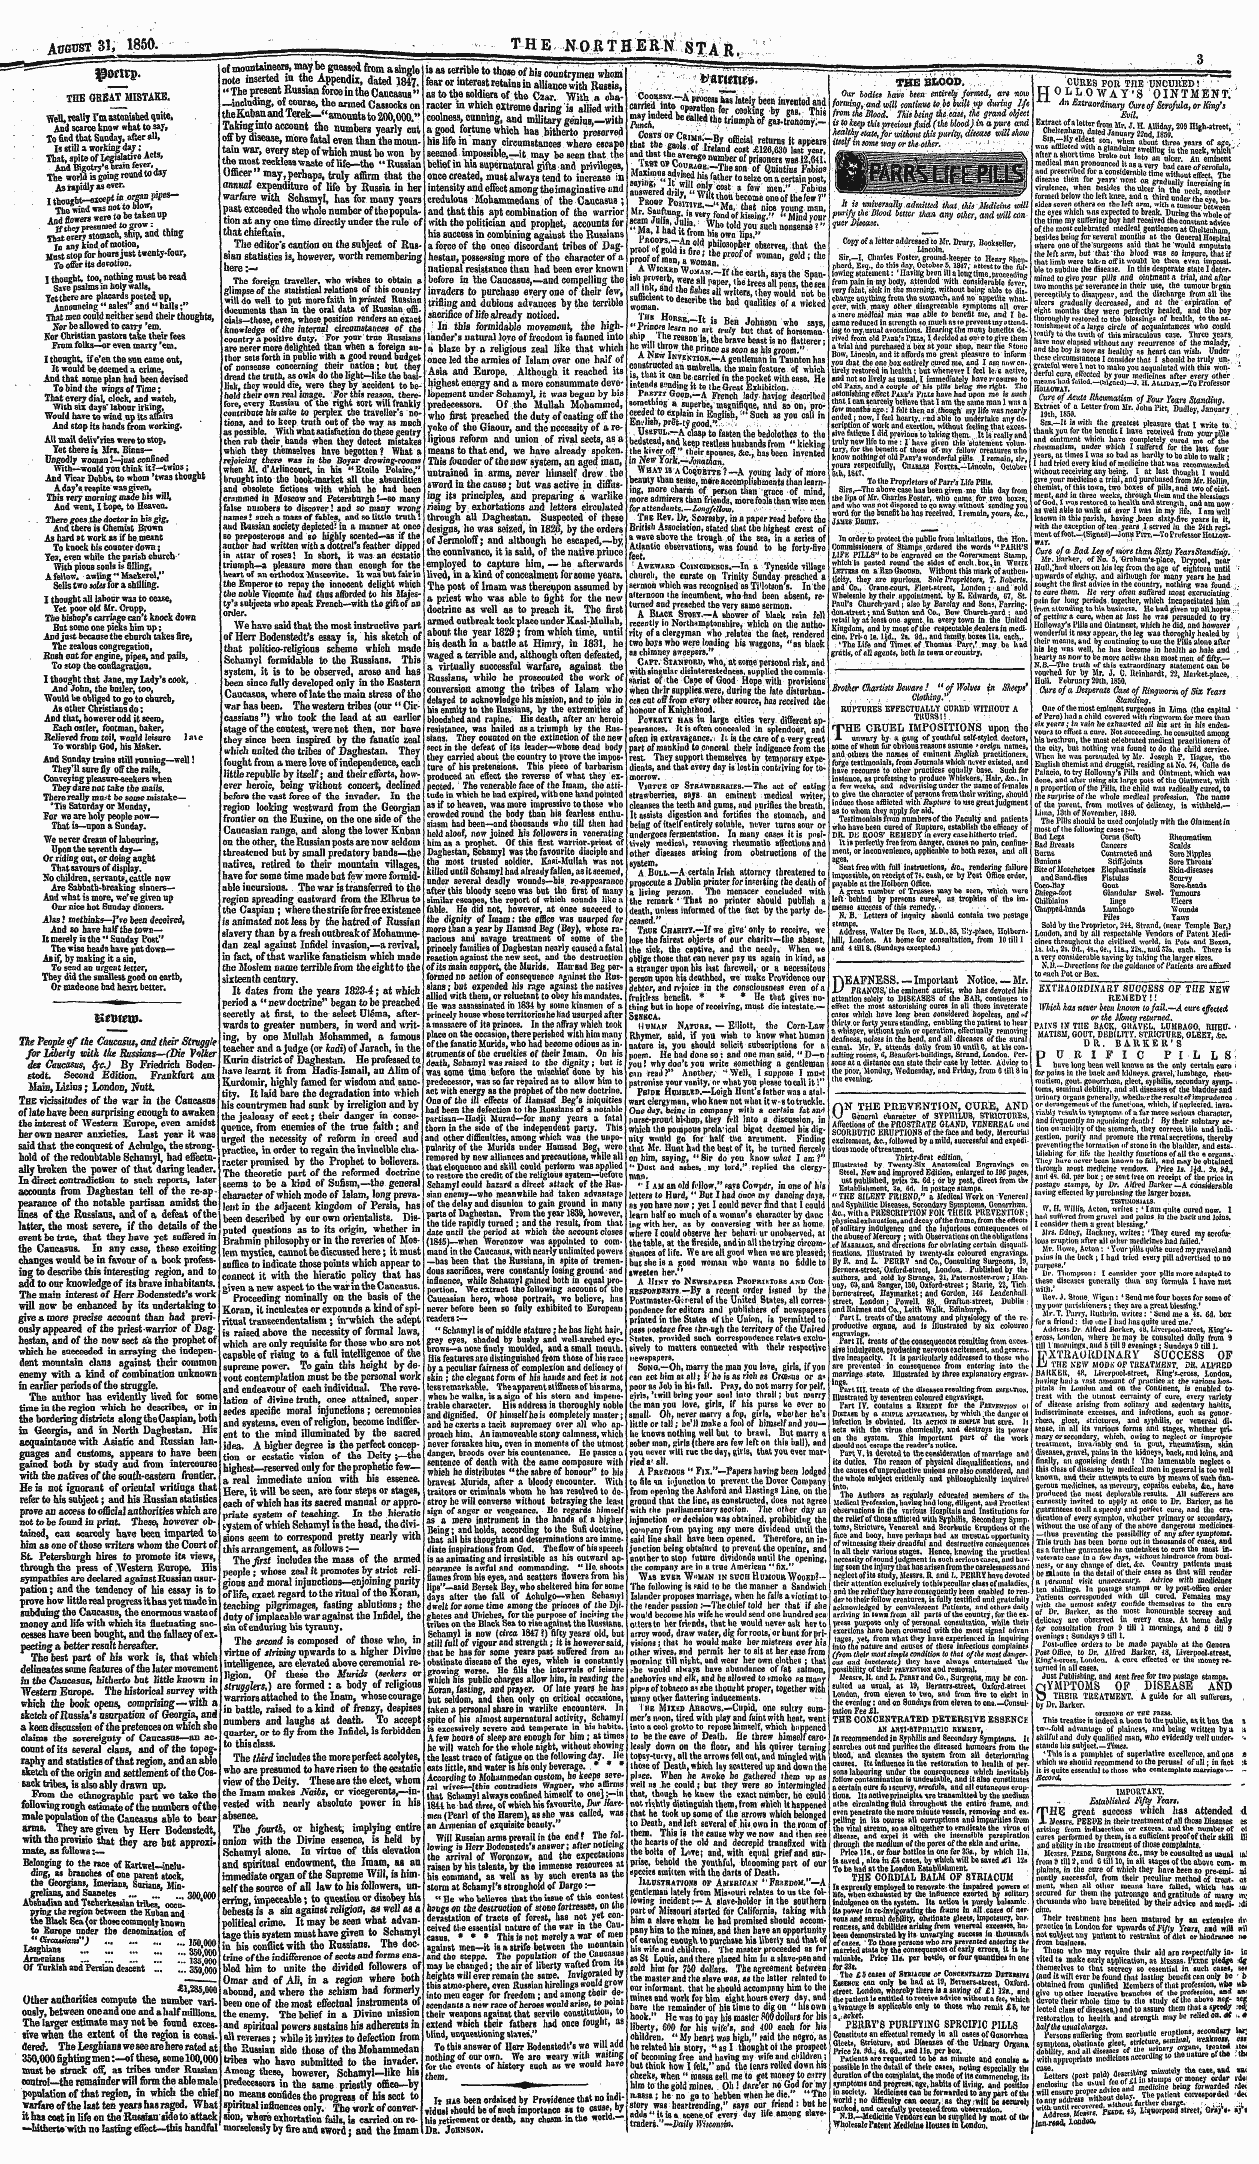 Northern Star (1837-1852): jS F Y, 2nd edition - The Btood. ;, . !:;.: